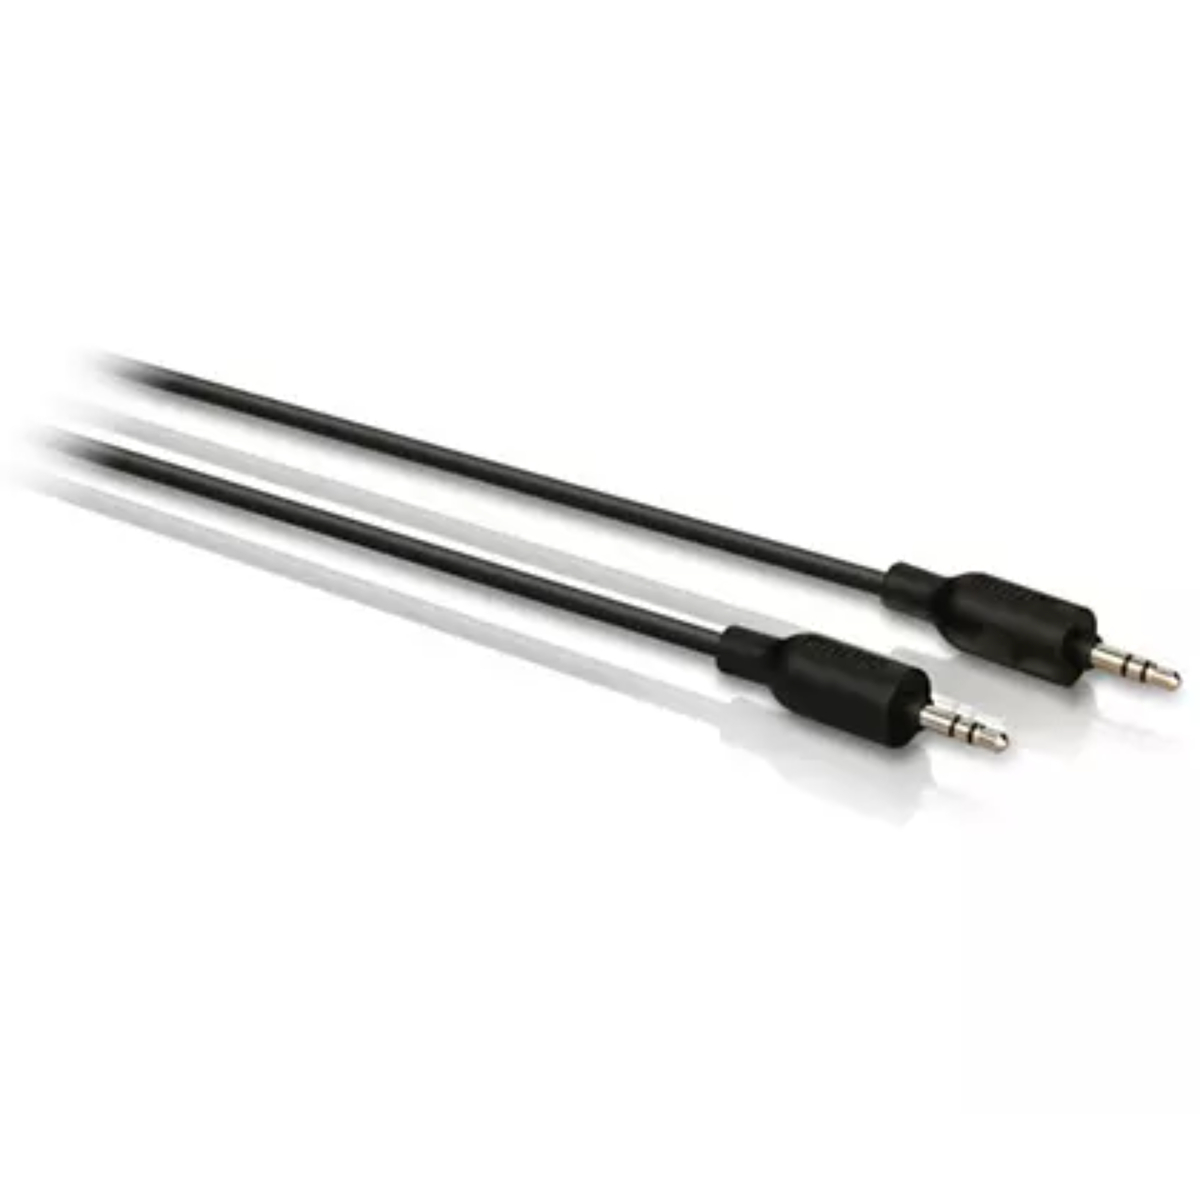 Philips Stereo Dubbing Cable, 1.5 m, Black, SWA2529W